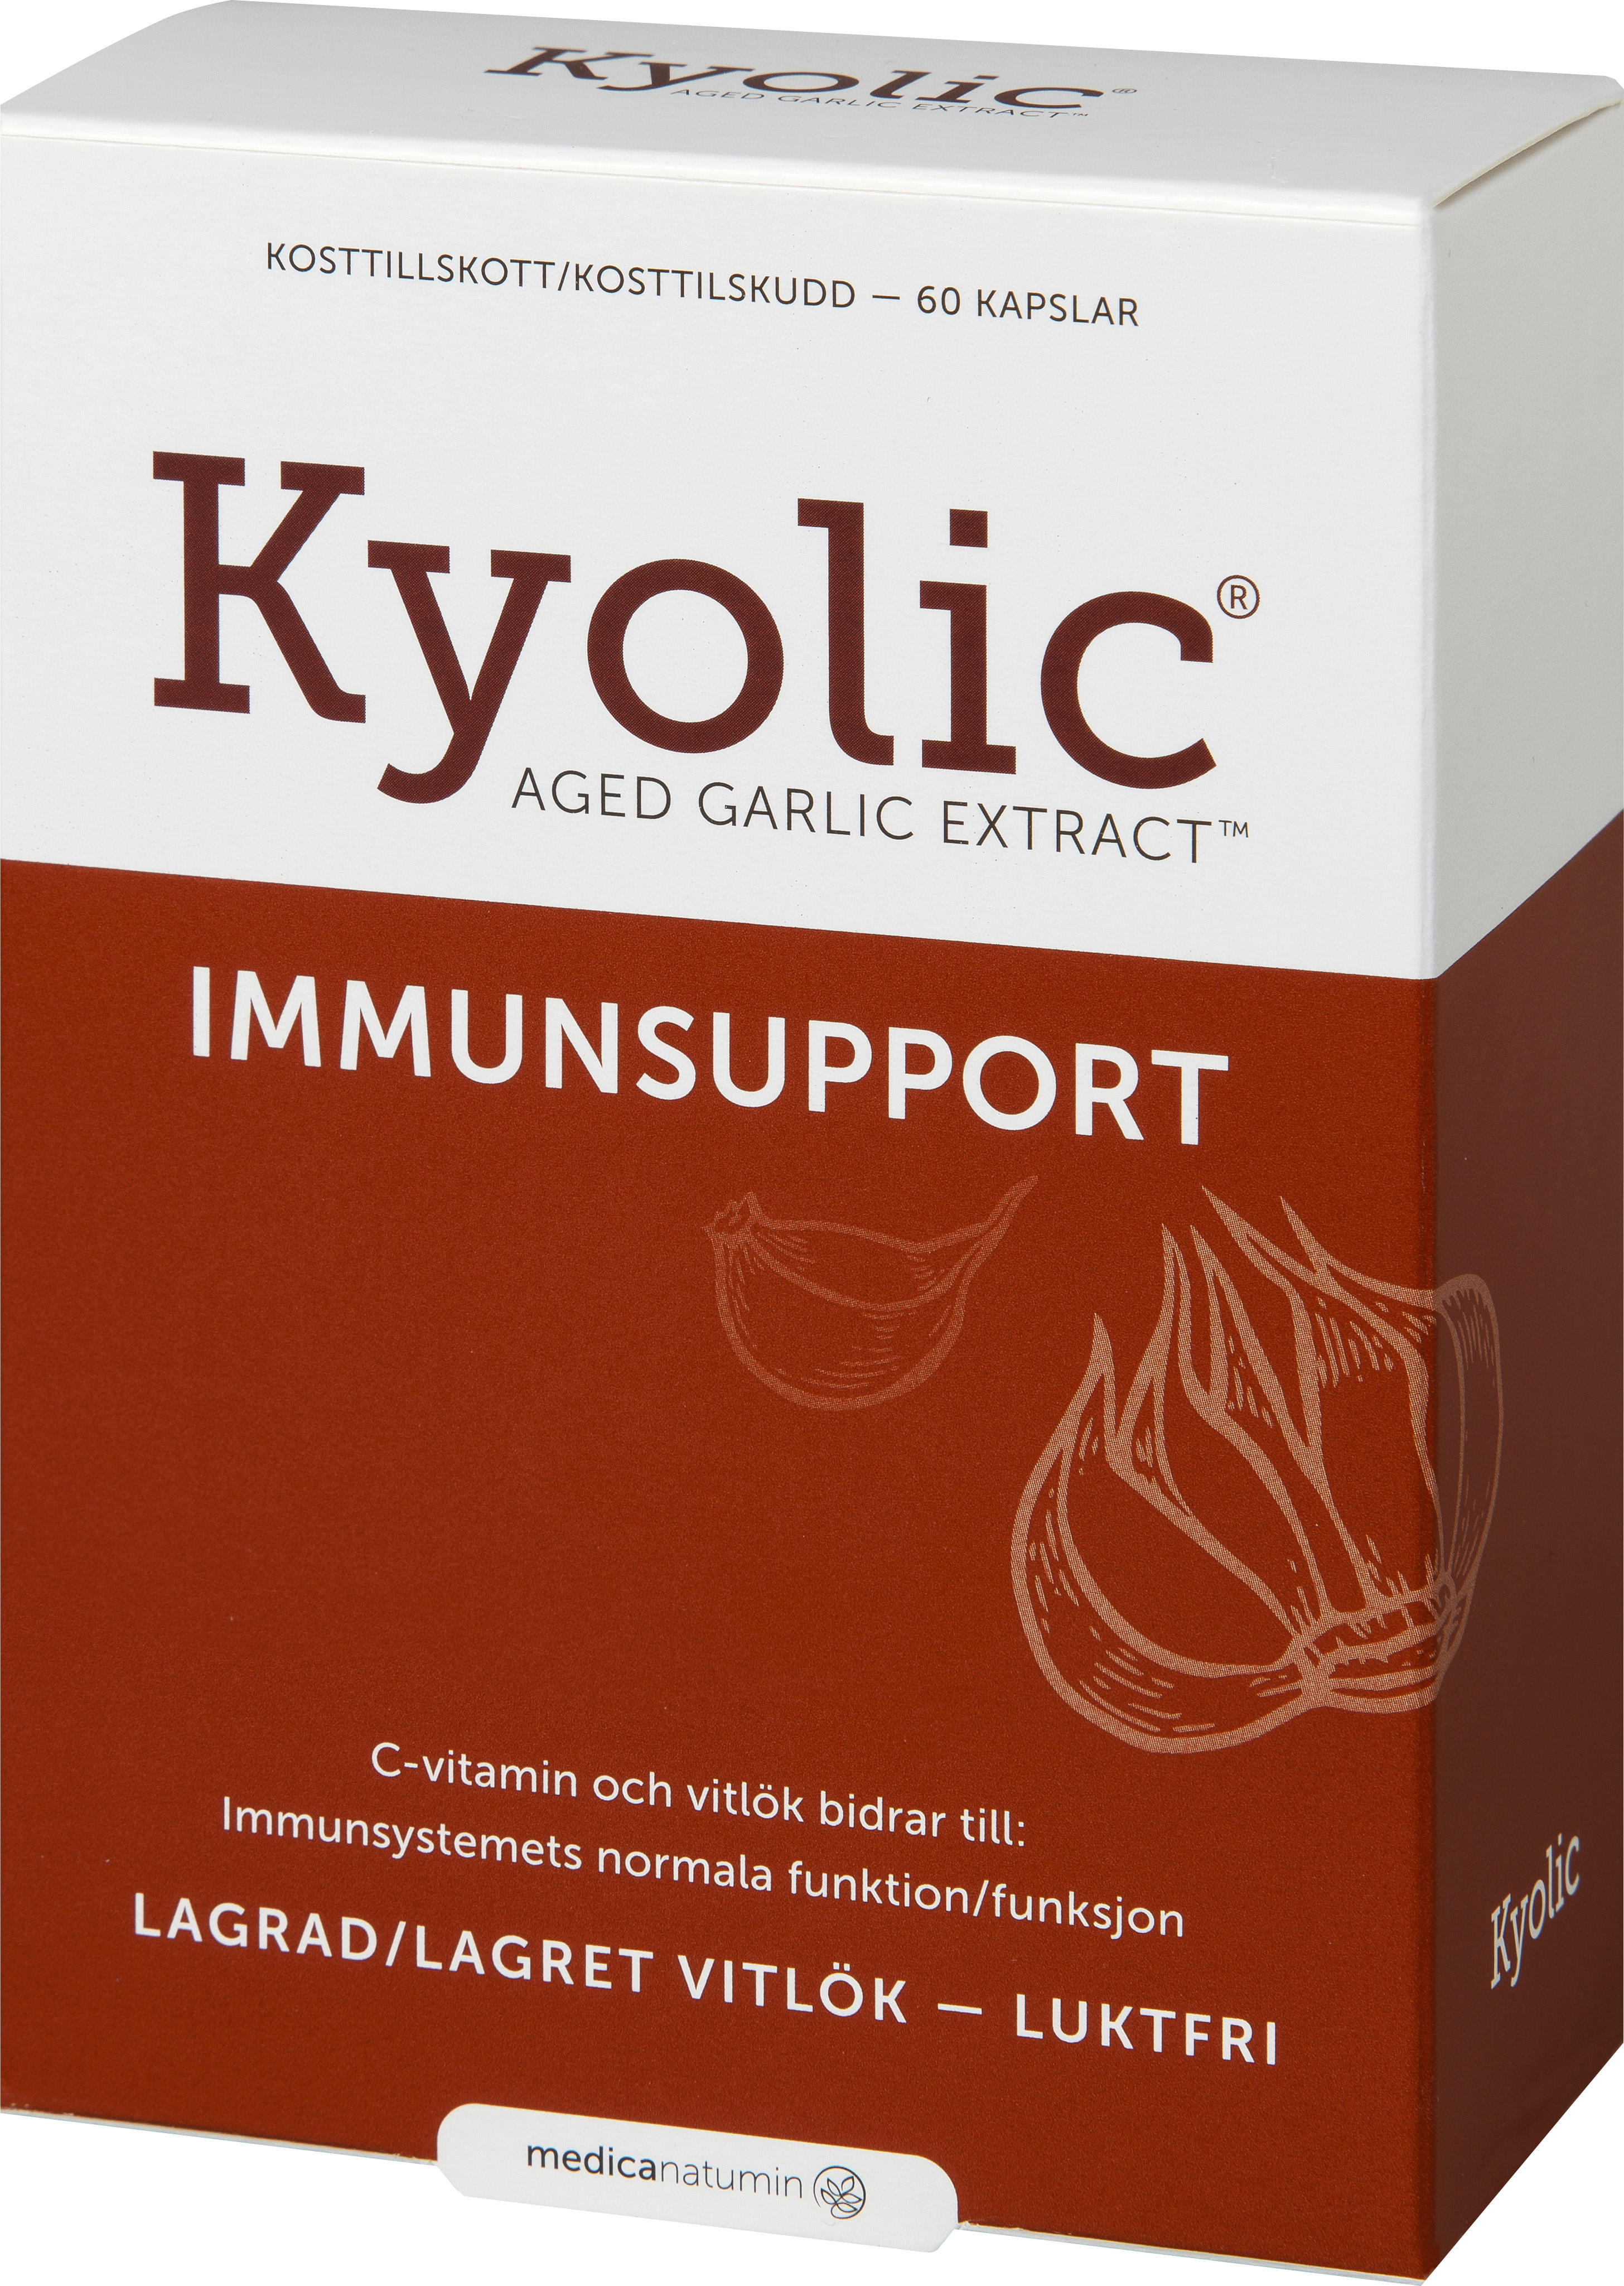 Kyolic Aged Carlic Extract + Immunsupport 60 kapslar